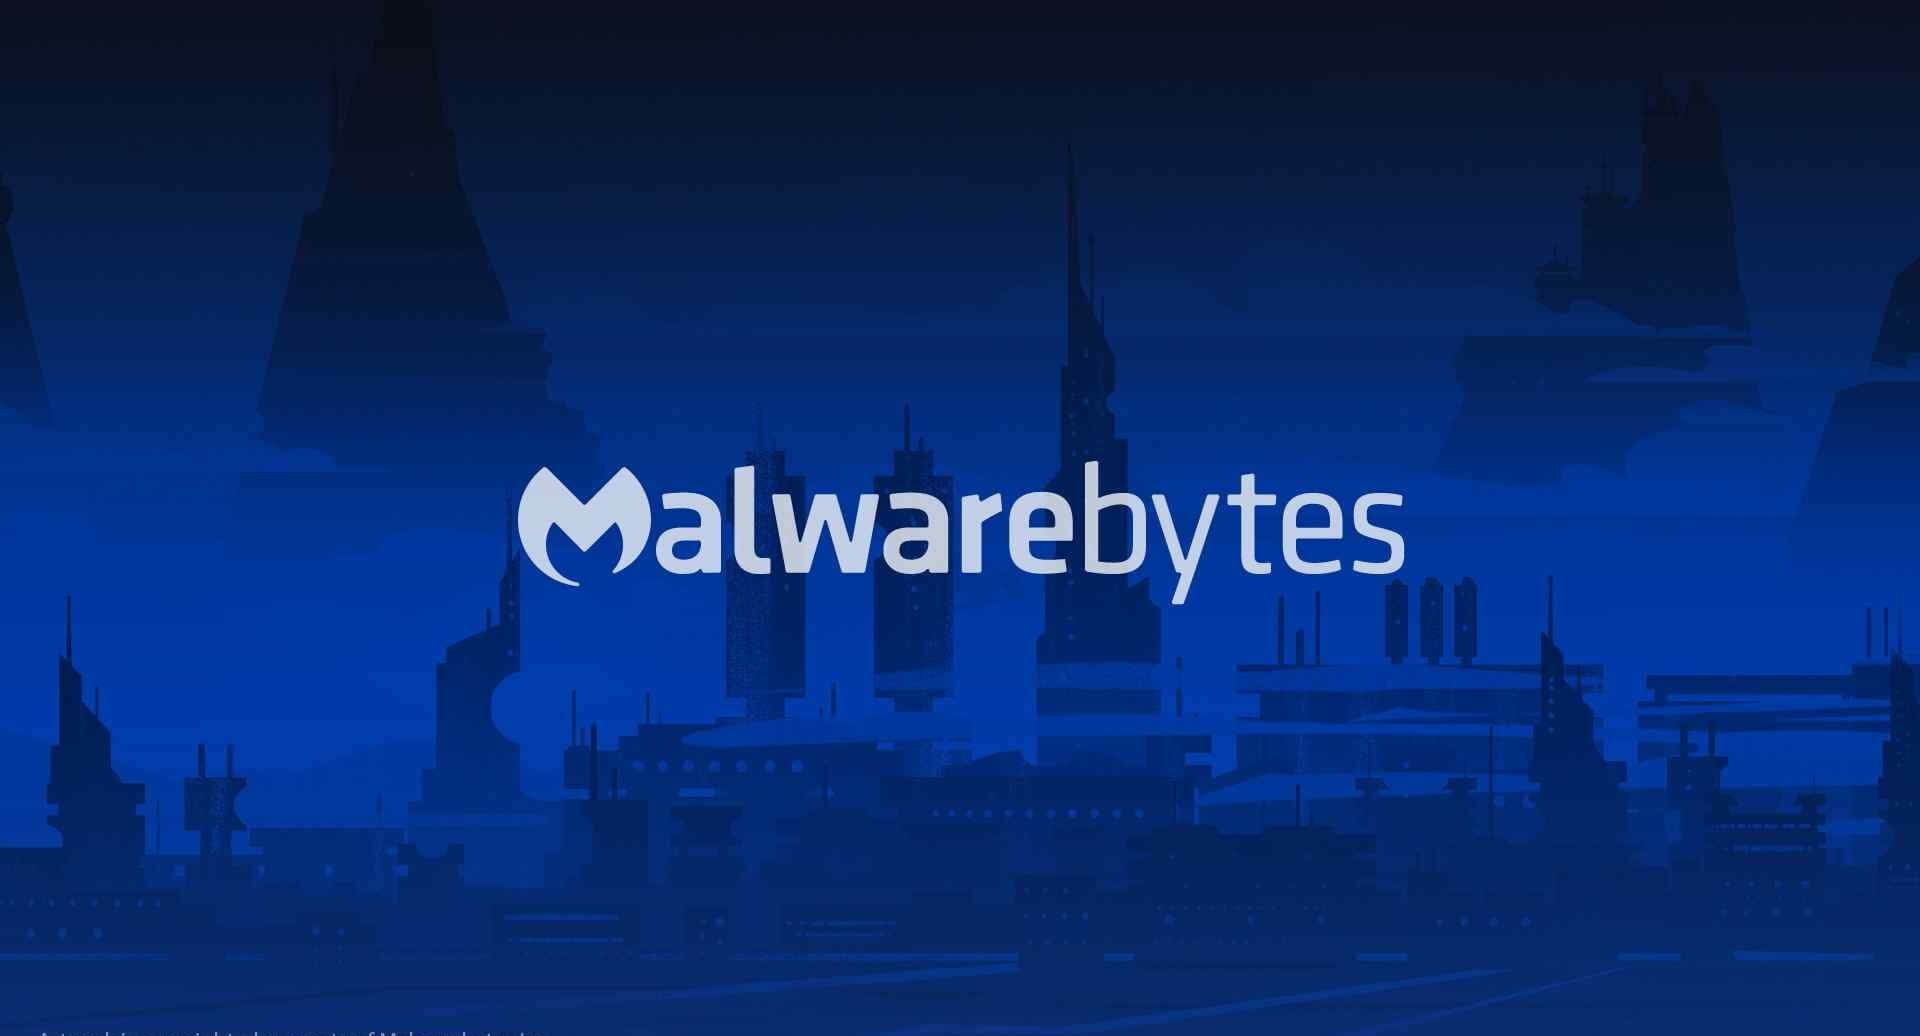 alternative to windows malcious software removal tool - malwarebytes